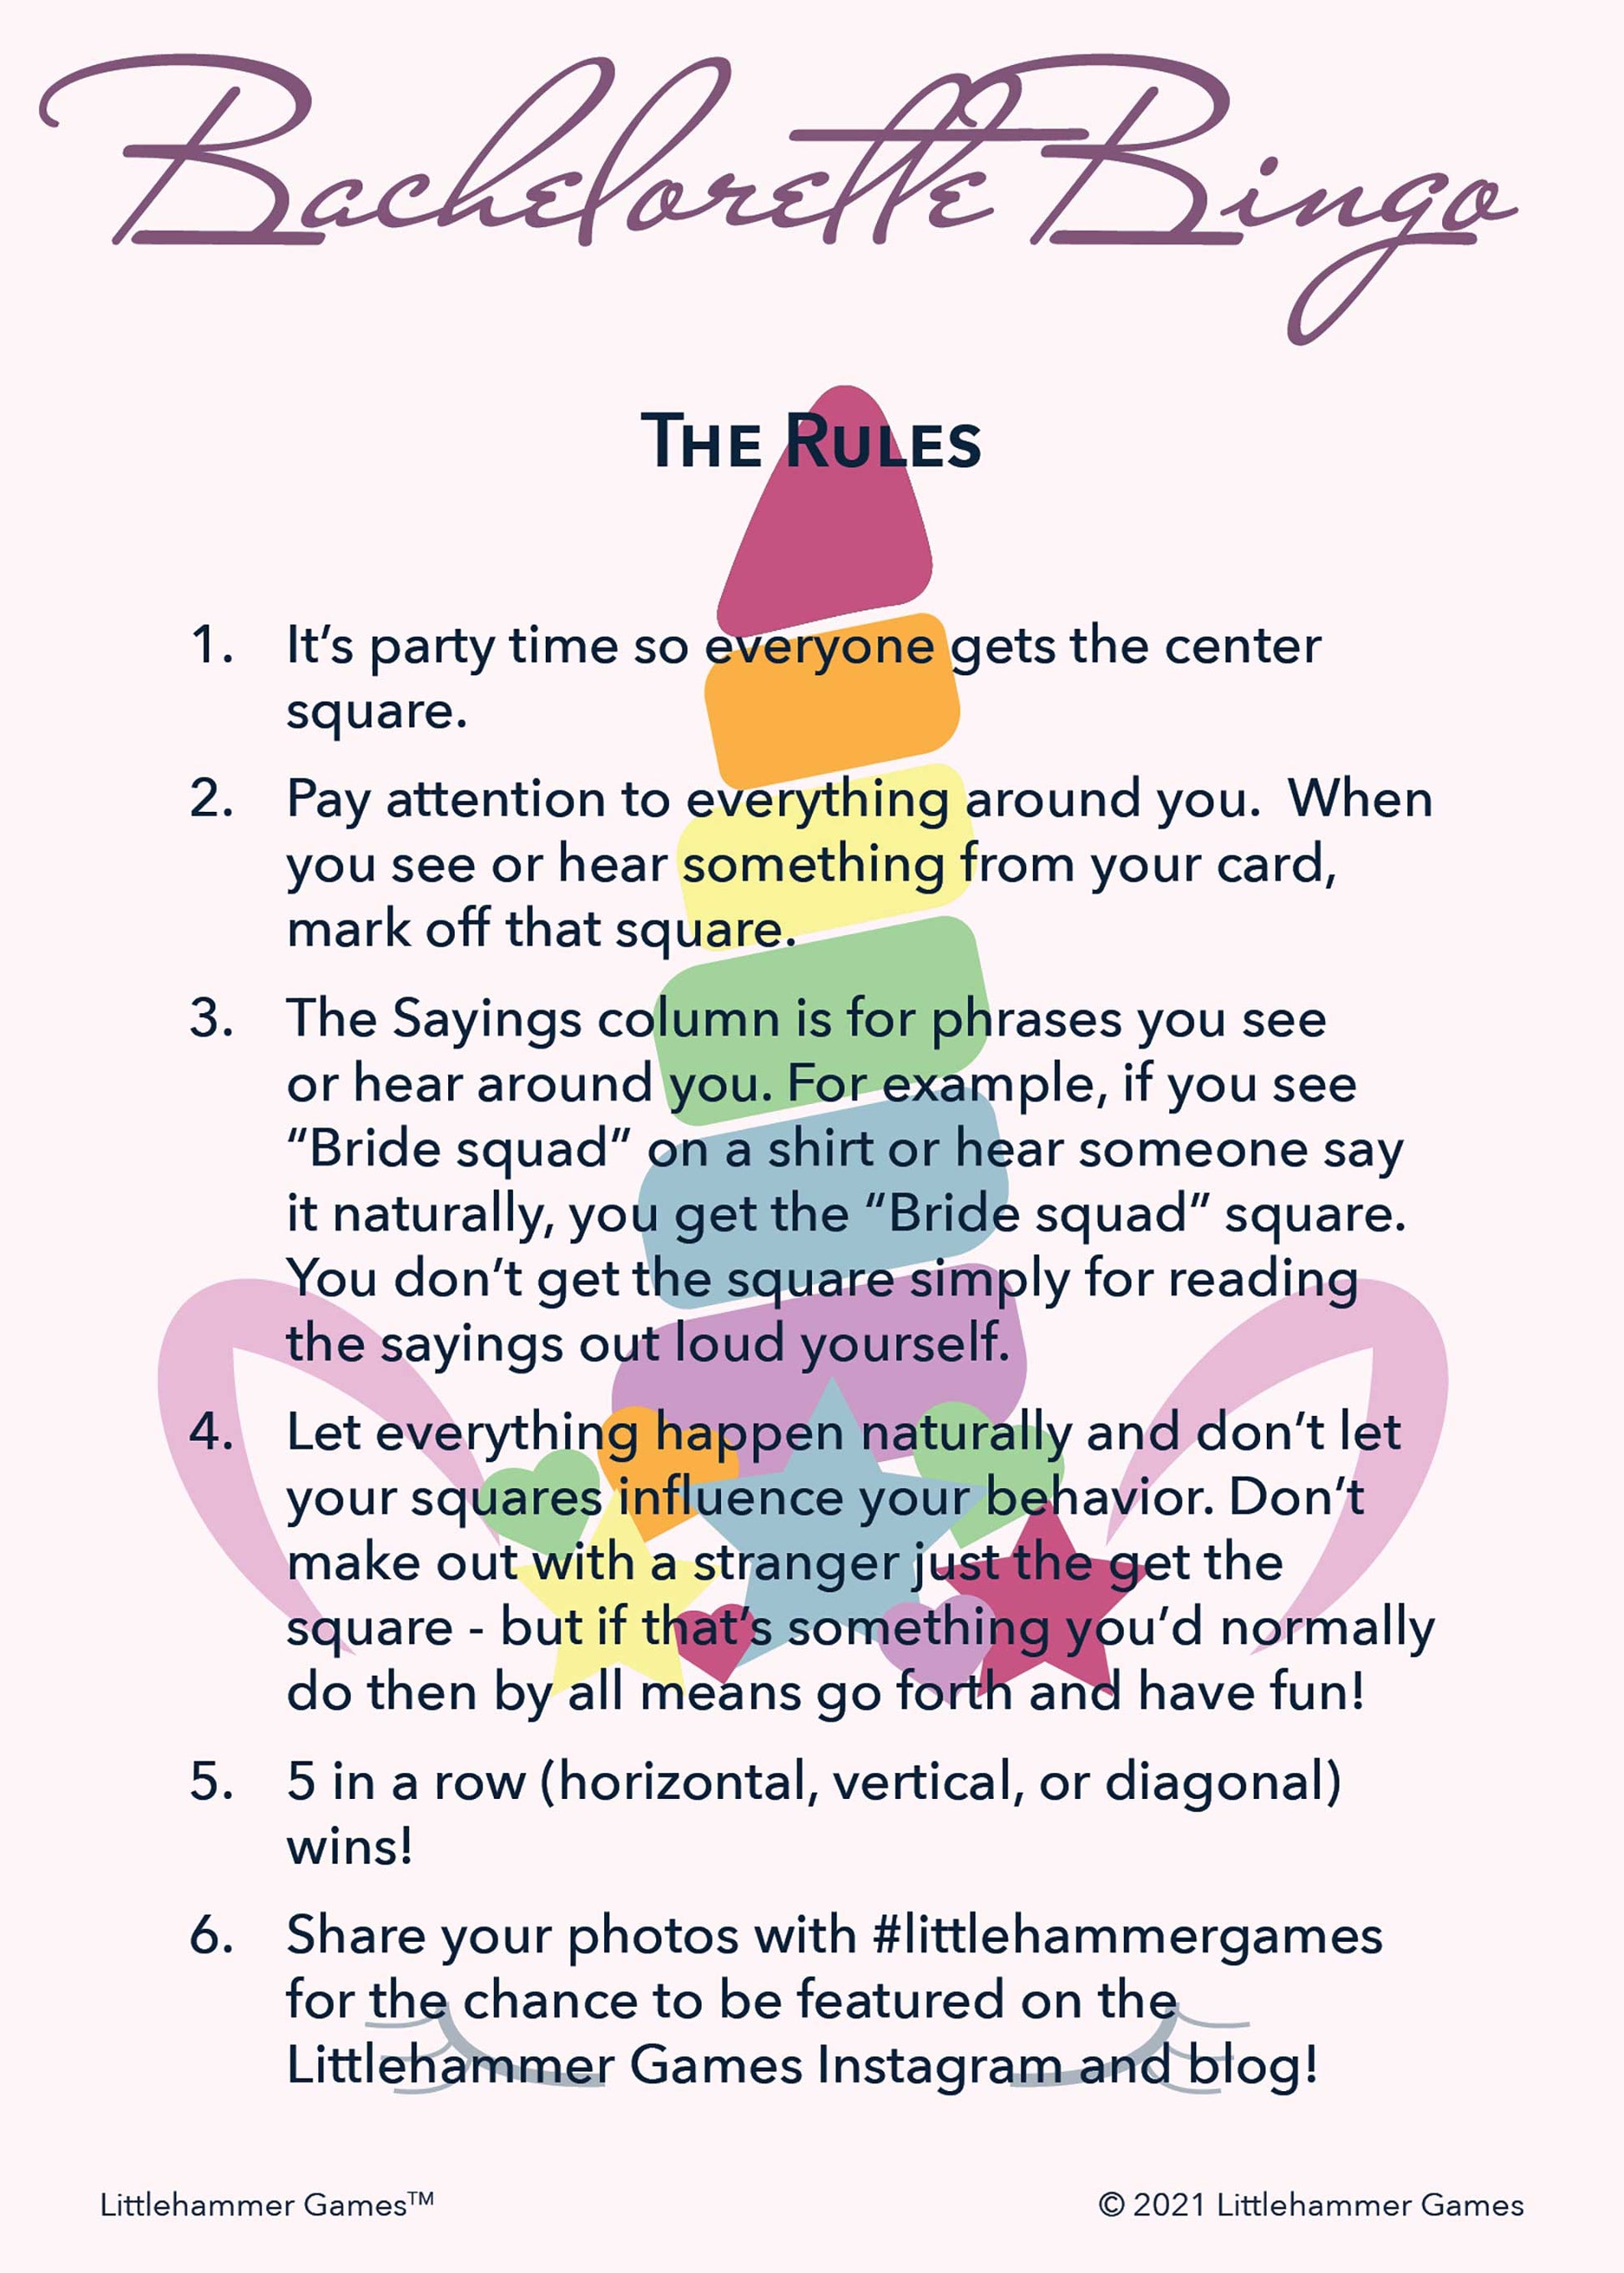 Bachelorette Bingo rules card with a unicorn-themed background